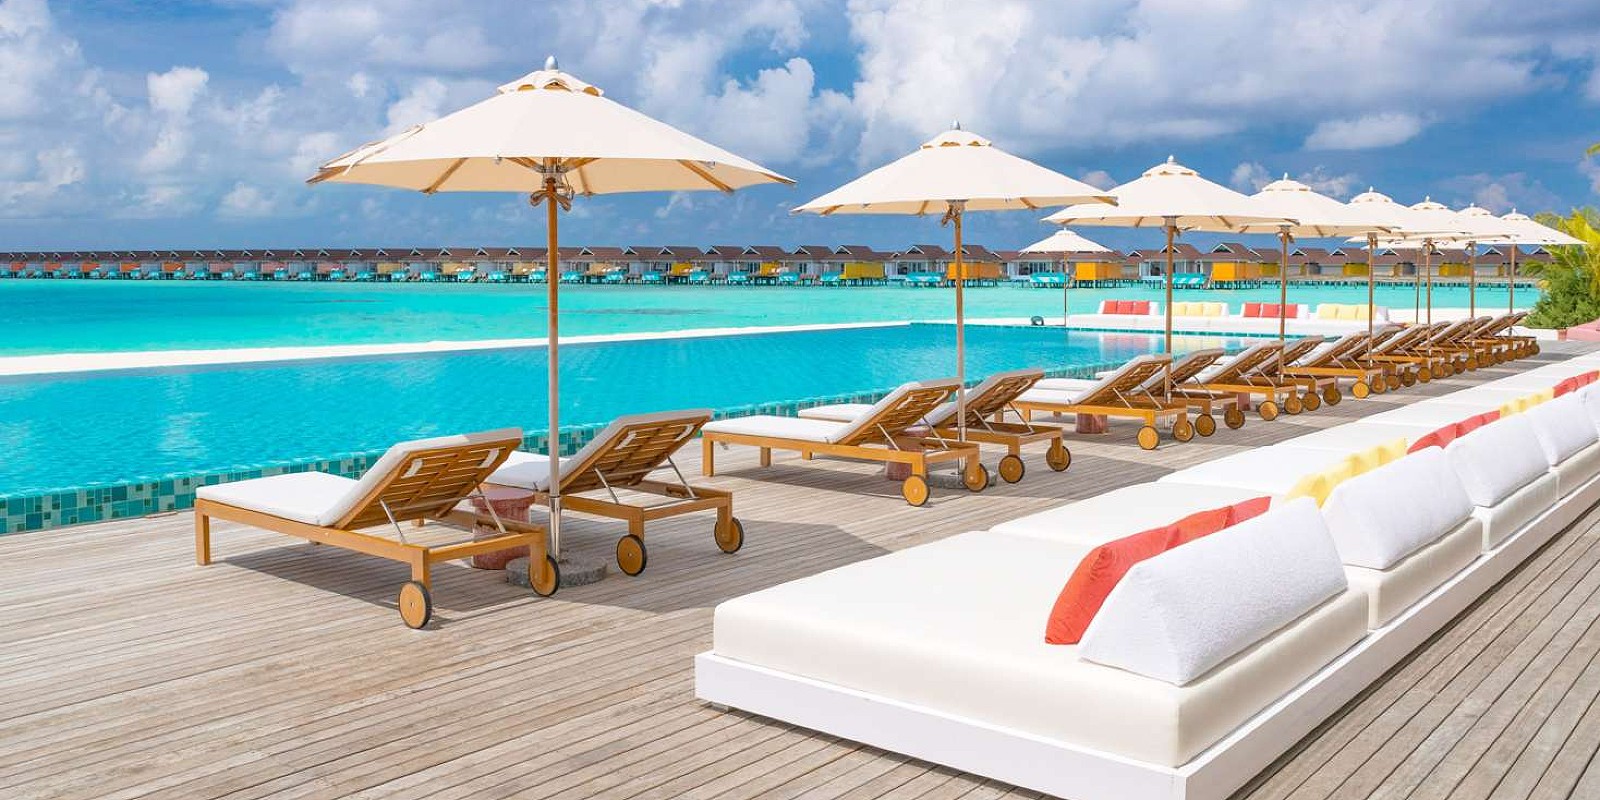 Travel blog: Introducing The Standard Maldives: Bringing Beach Club Vibes to Paradise